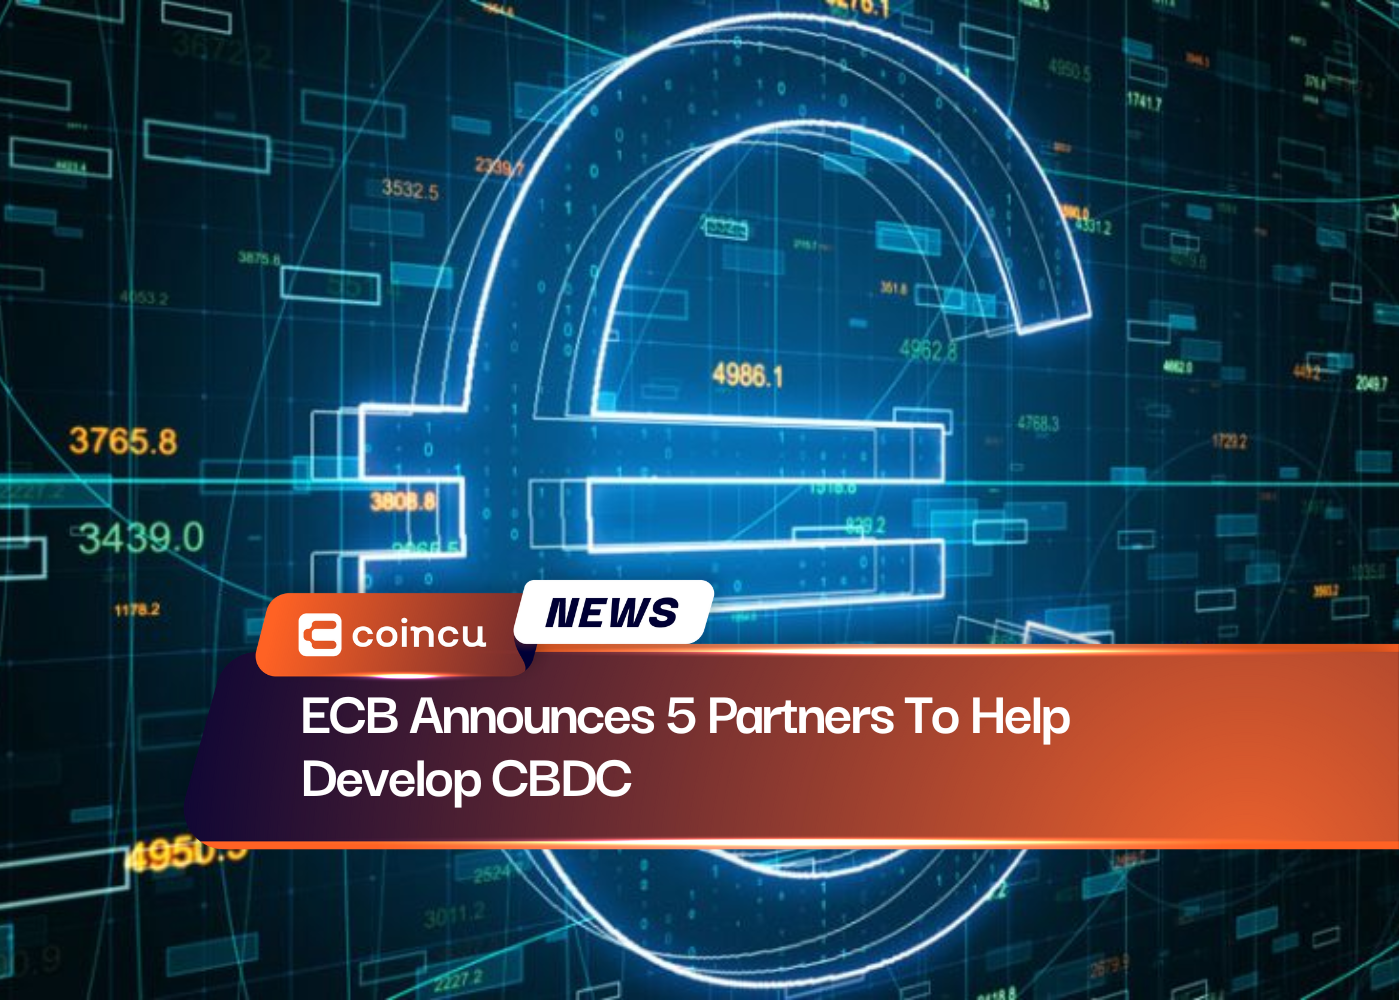 ECB Announces 5 Partners To Help Develop CBDC